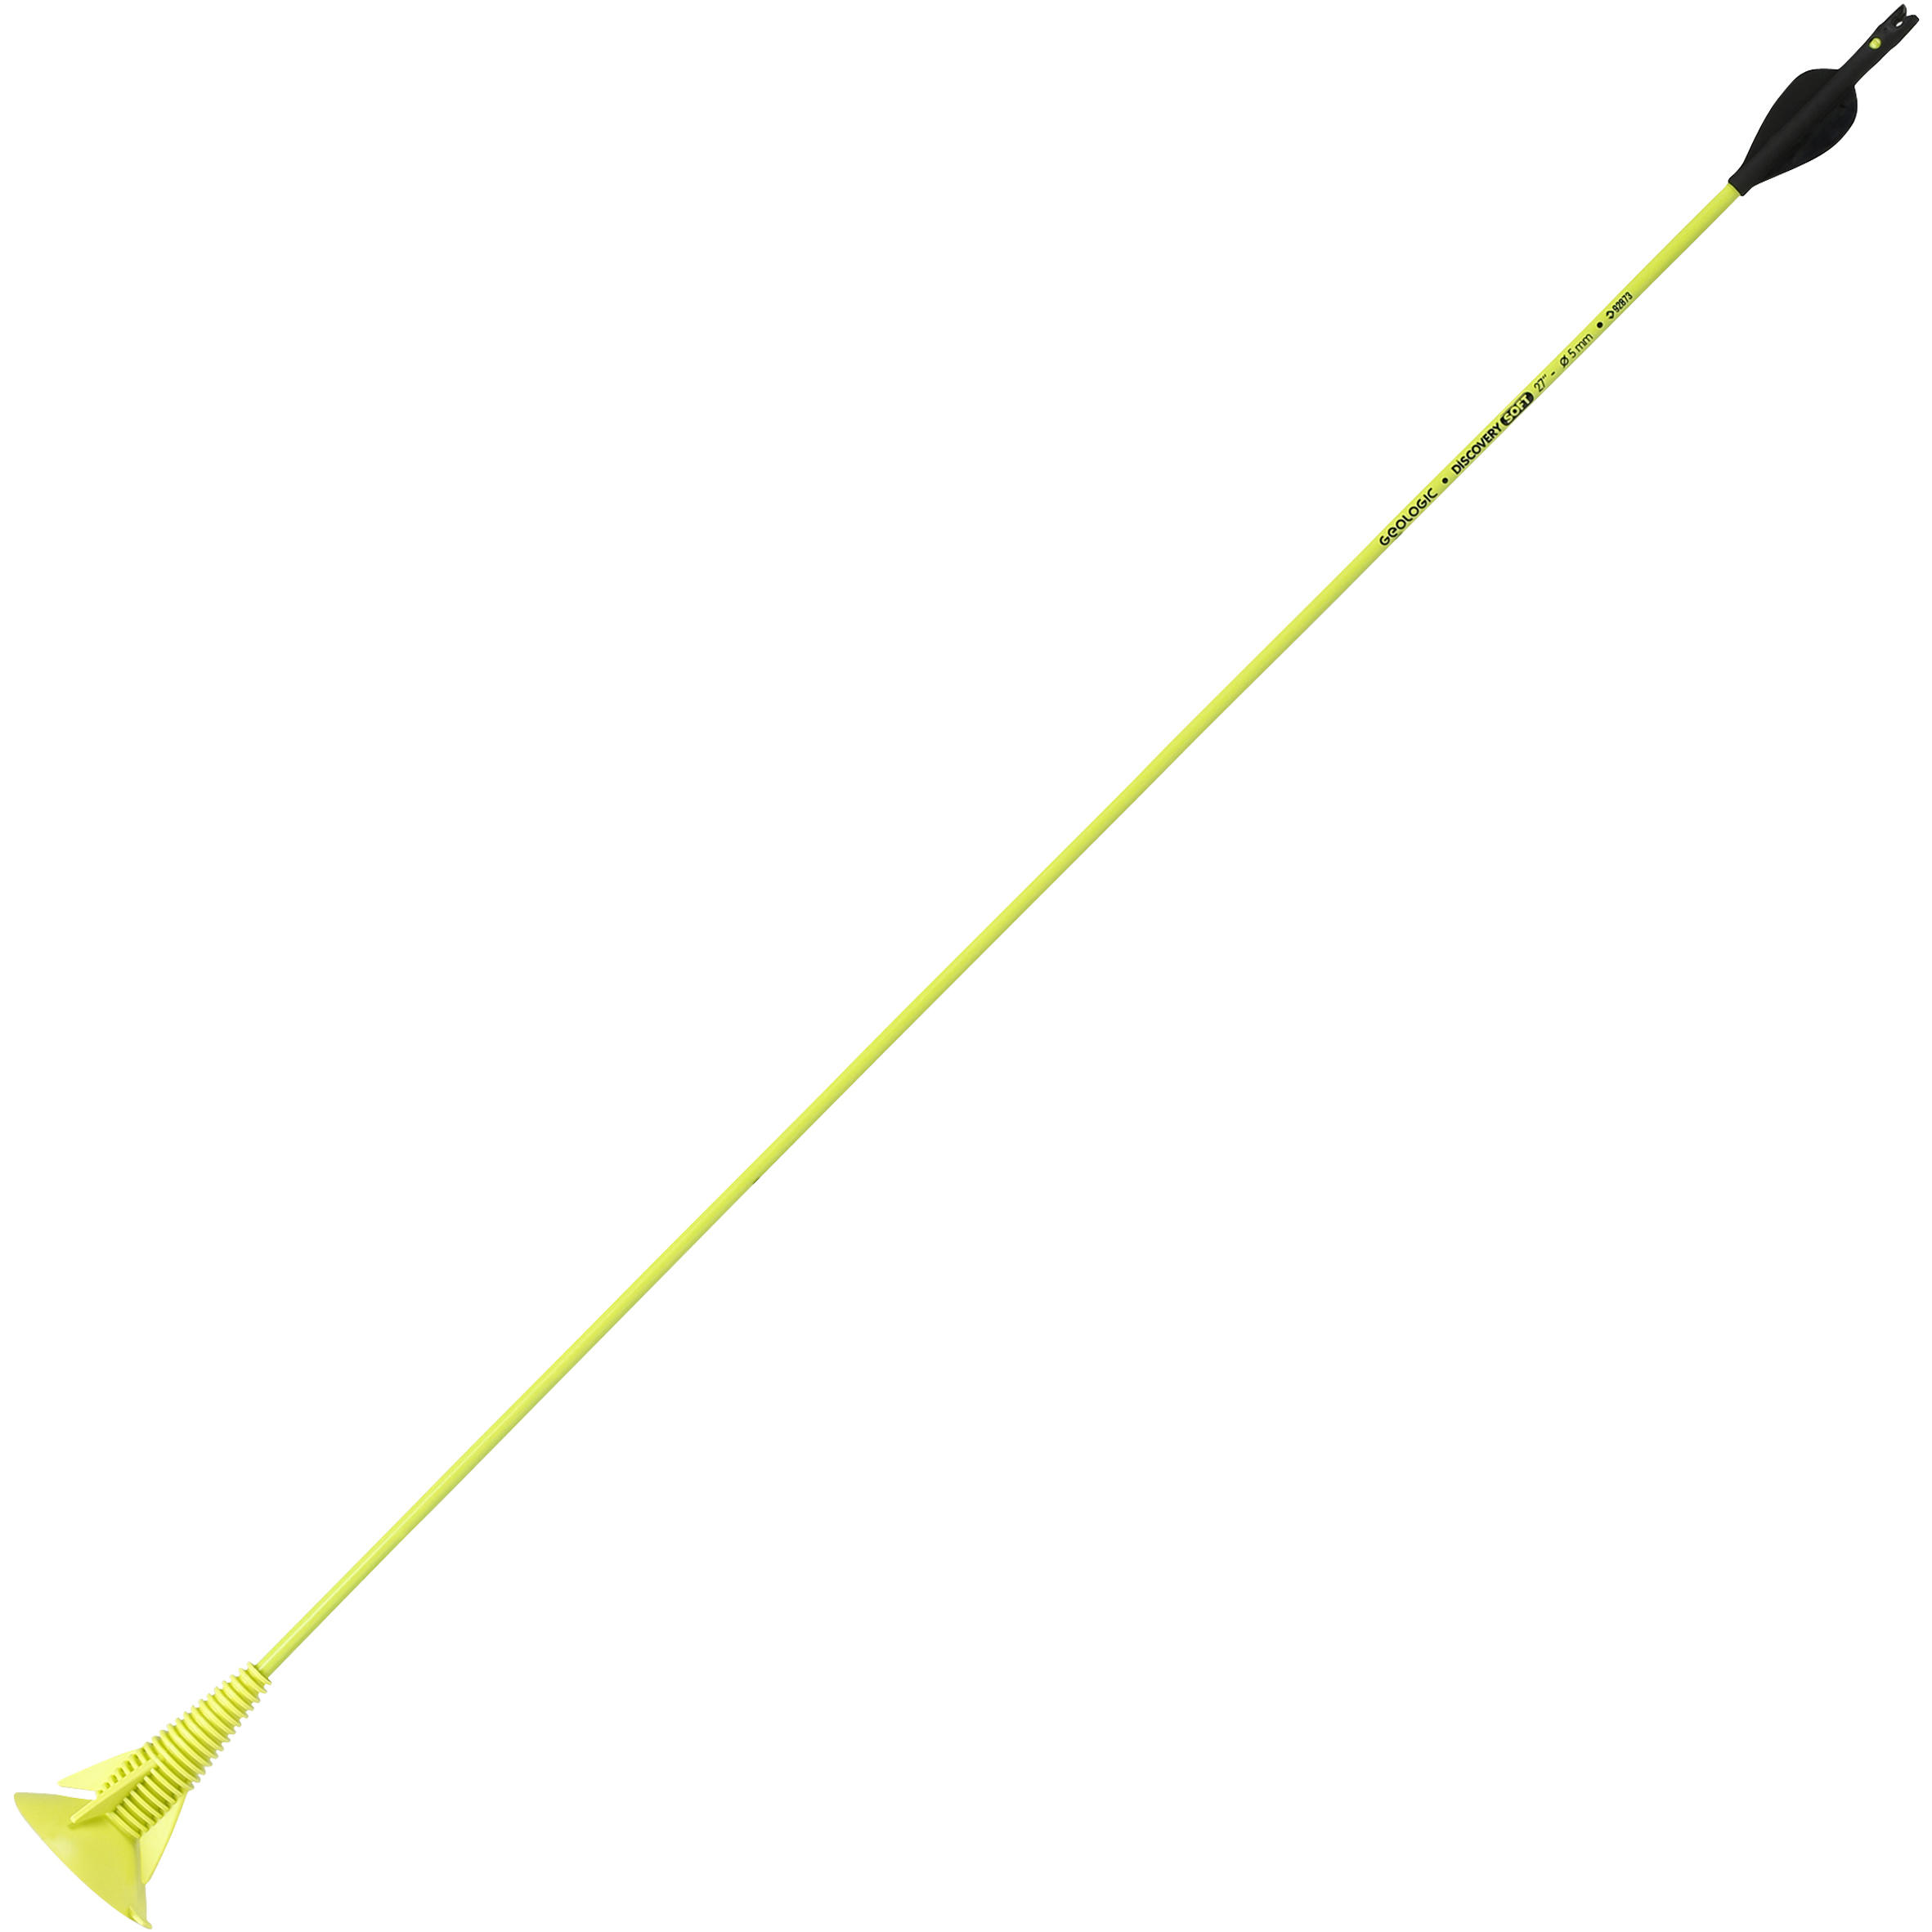 Discosoft Archery Arrows Twin-Pack - Green 21/21